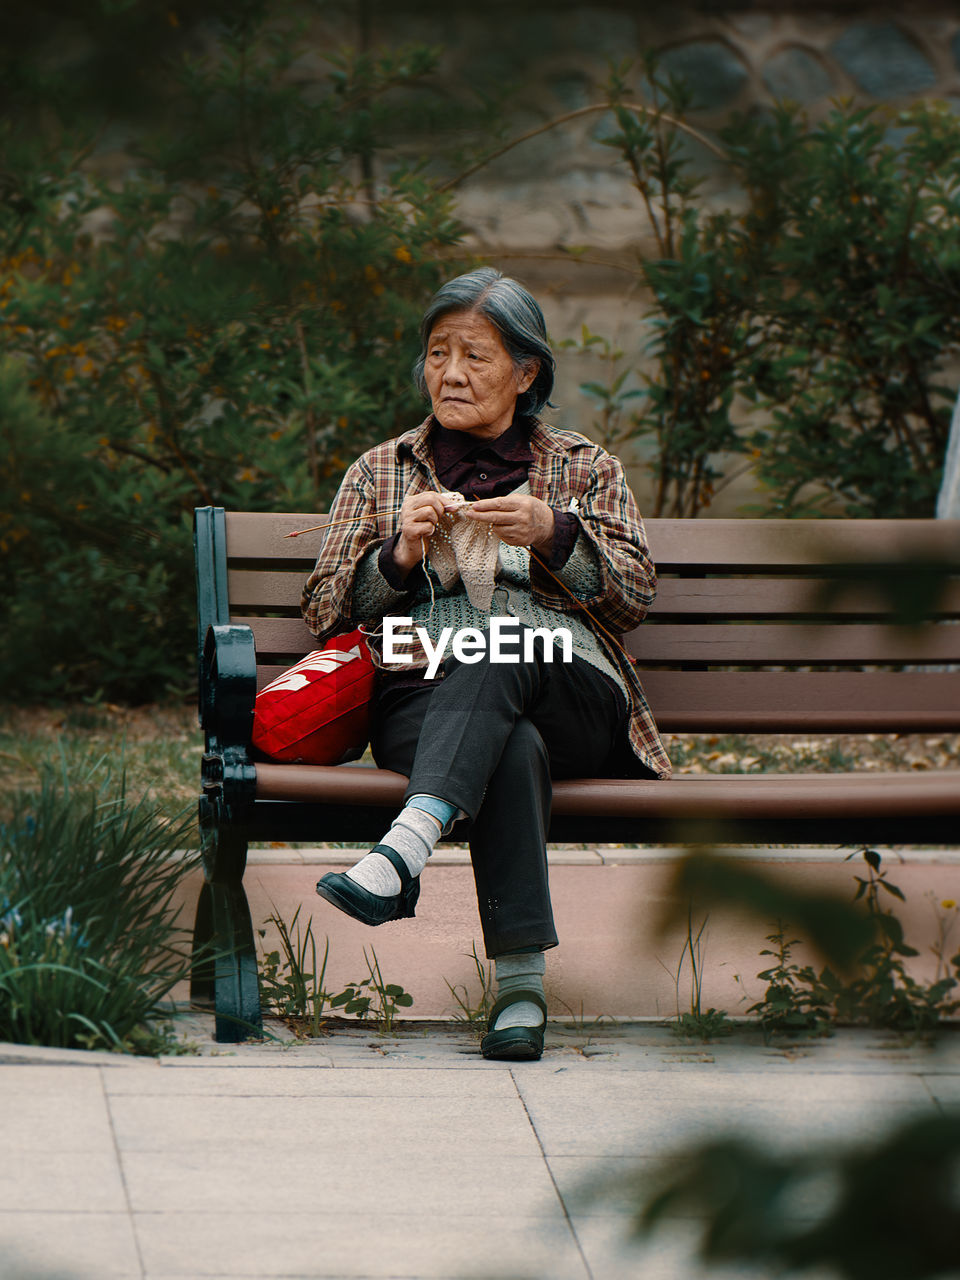 Elderly woman crocheting on a park bench